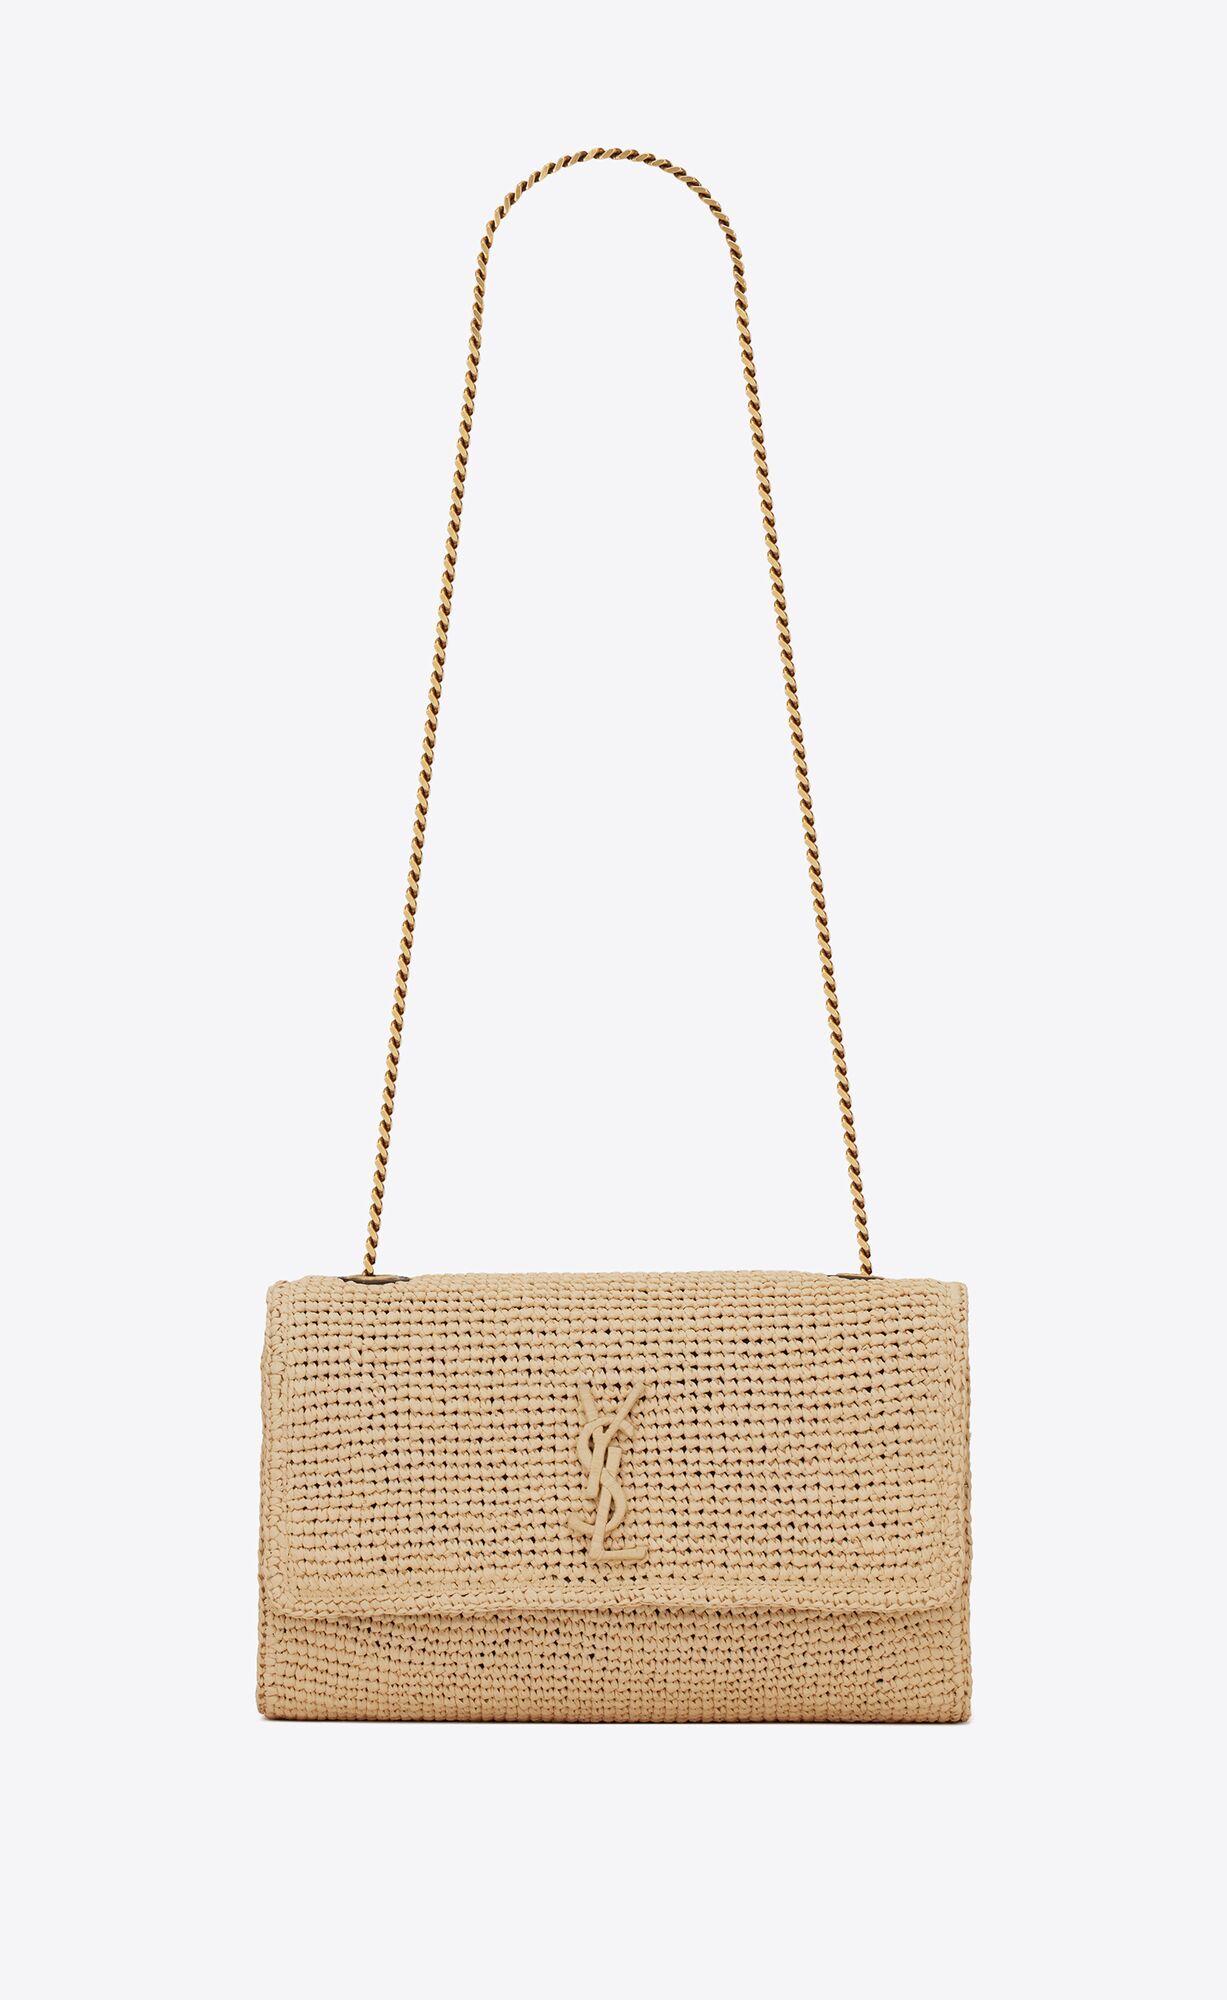 Kate medium chain bag in raffia and smooth leather | Saint Laurent | YSL.com | Saint Laurent Inc. (Global)